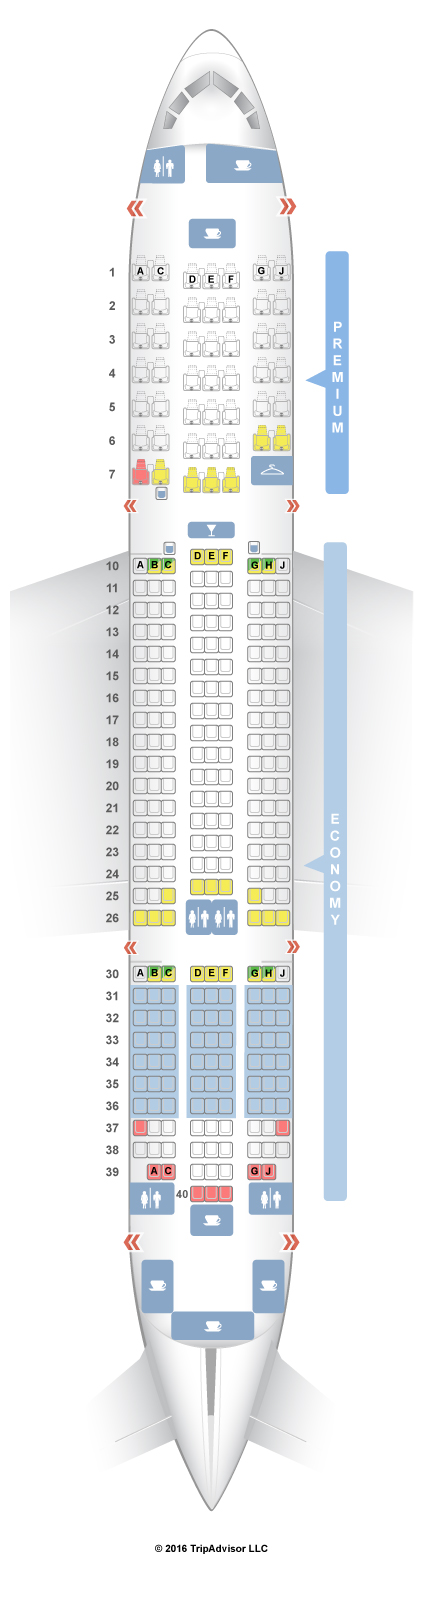 Thomson Dreamliner Seating Chart 787